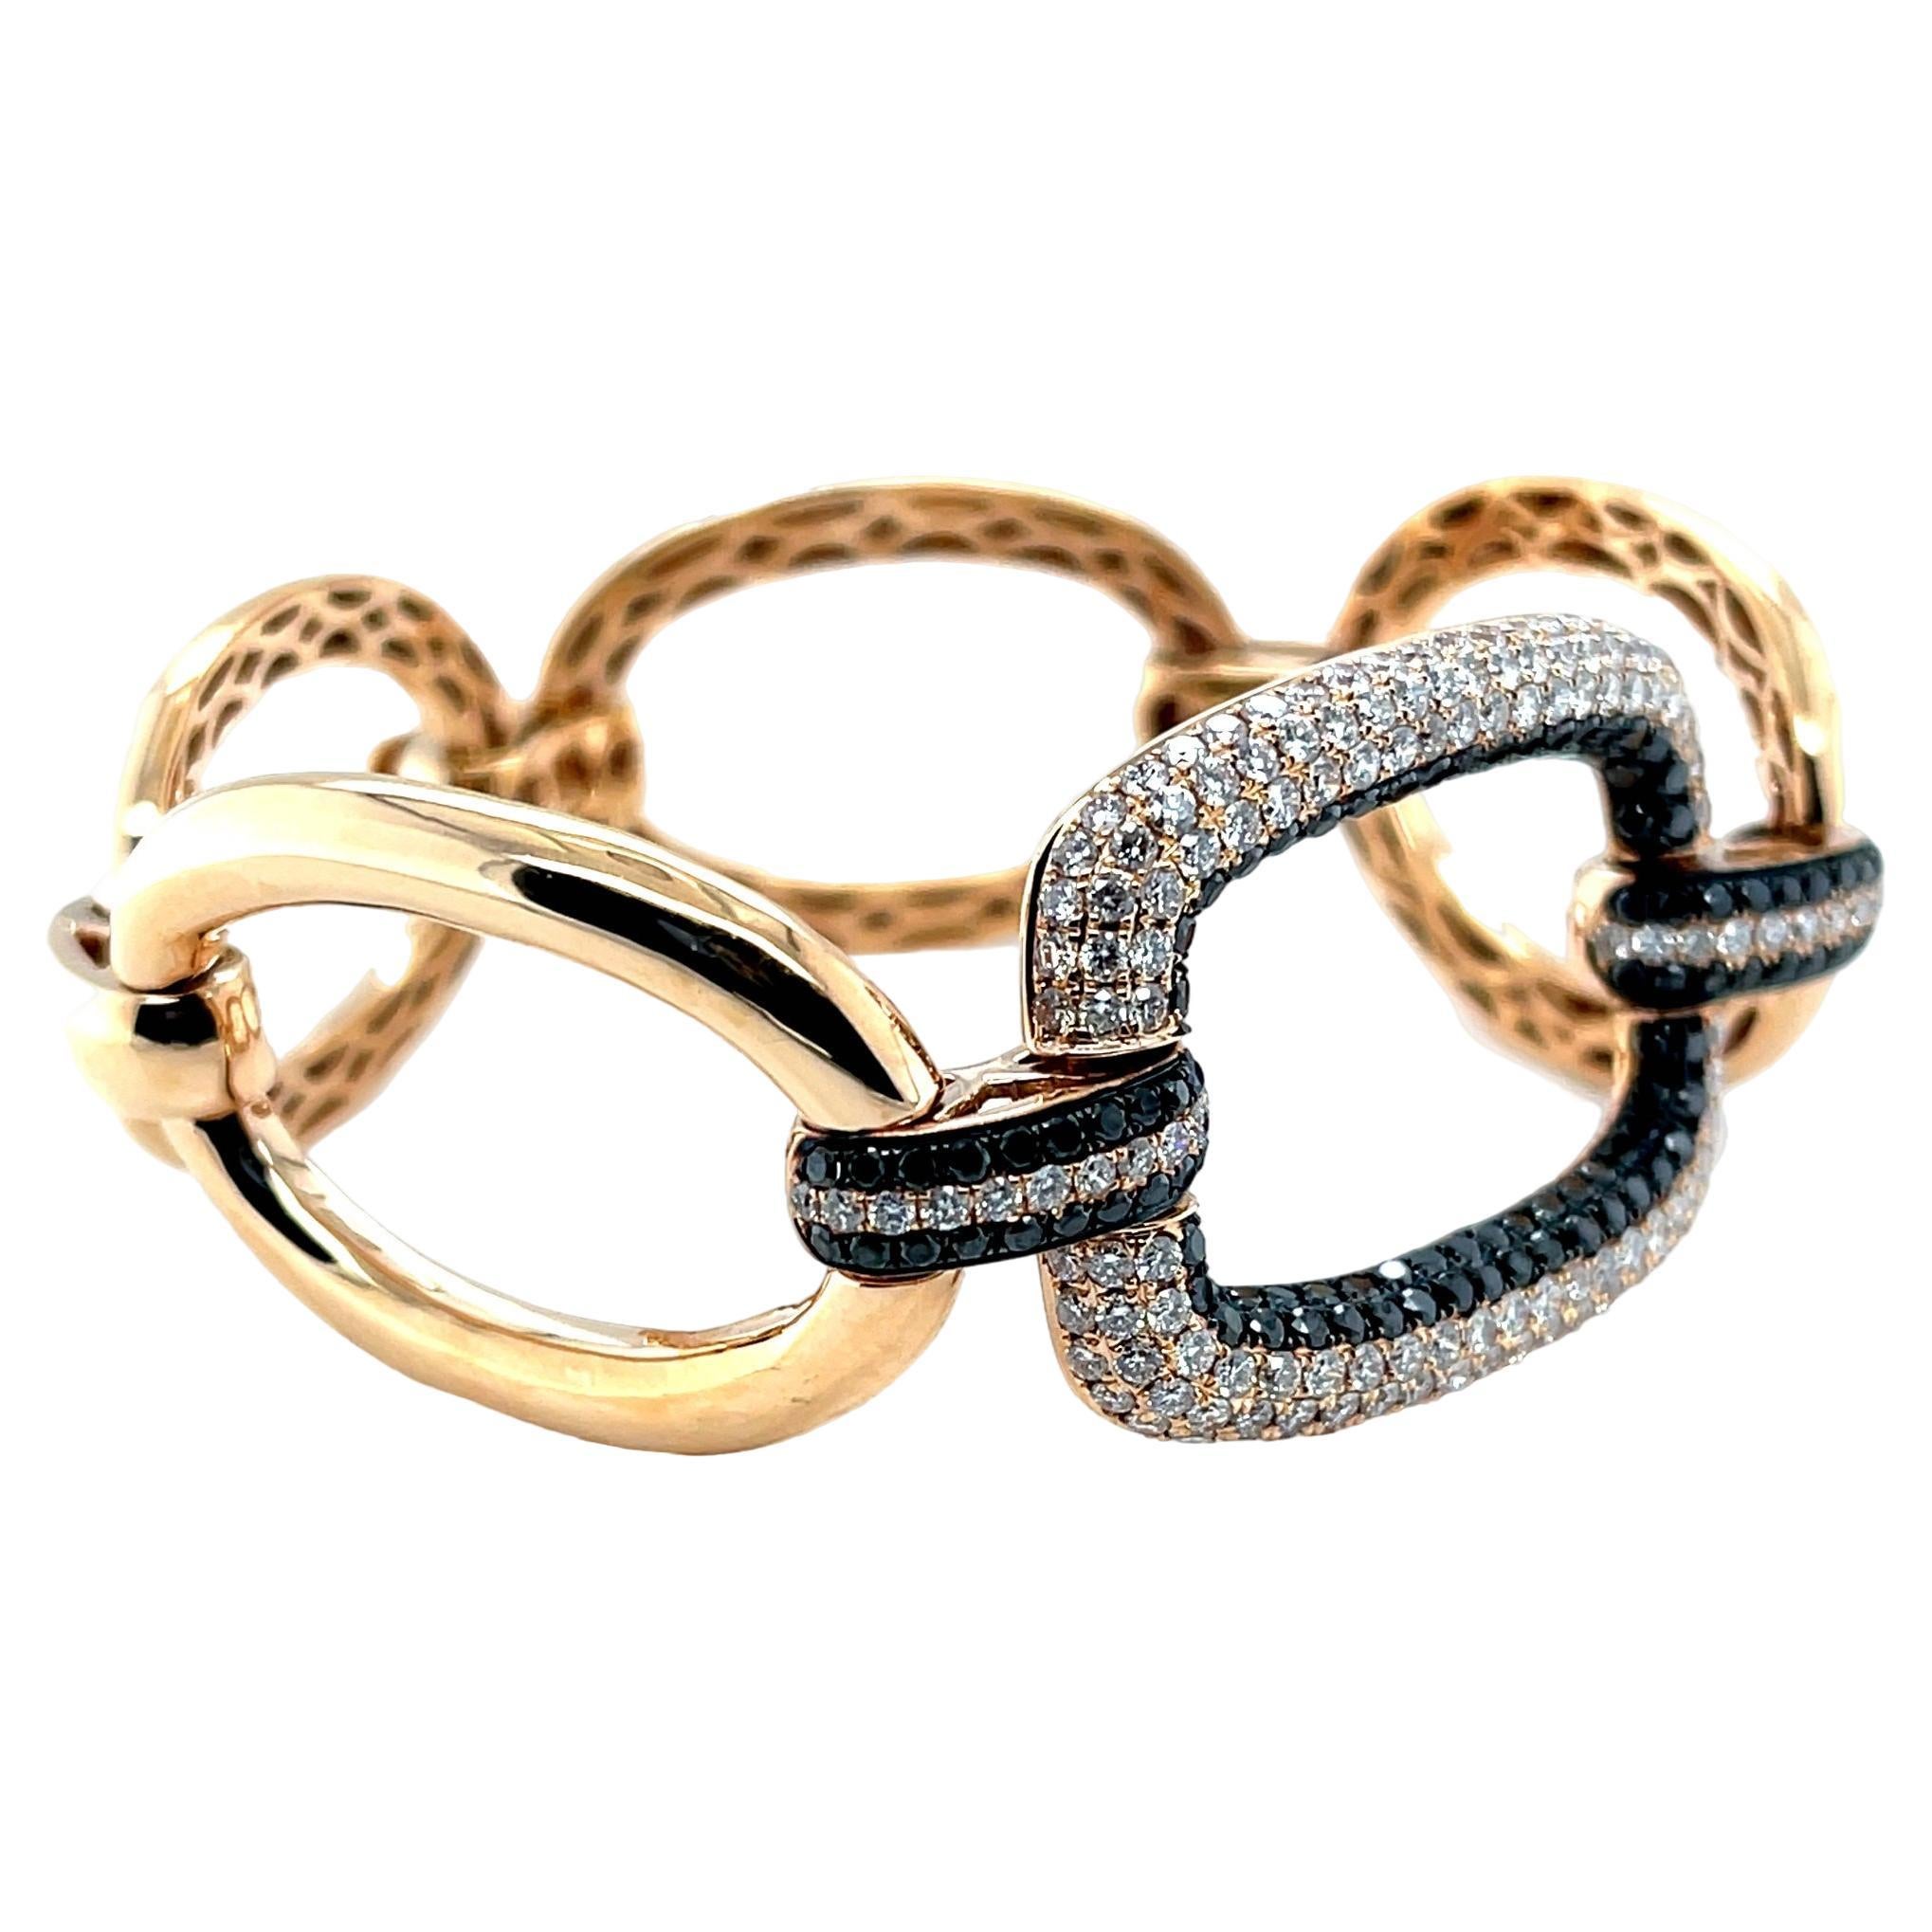 Black and White Diamond Link Bracelet in Rose Gold, 3.52 Carat Total